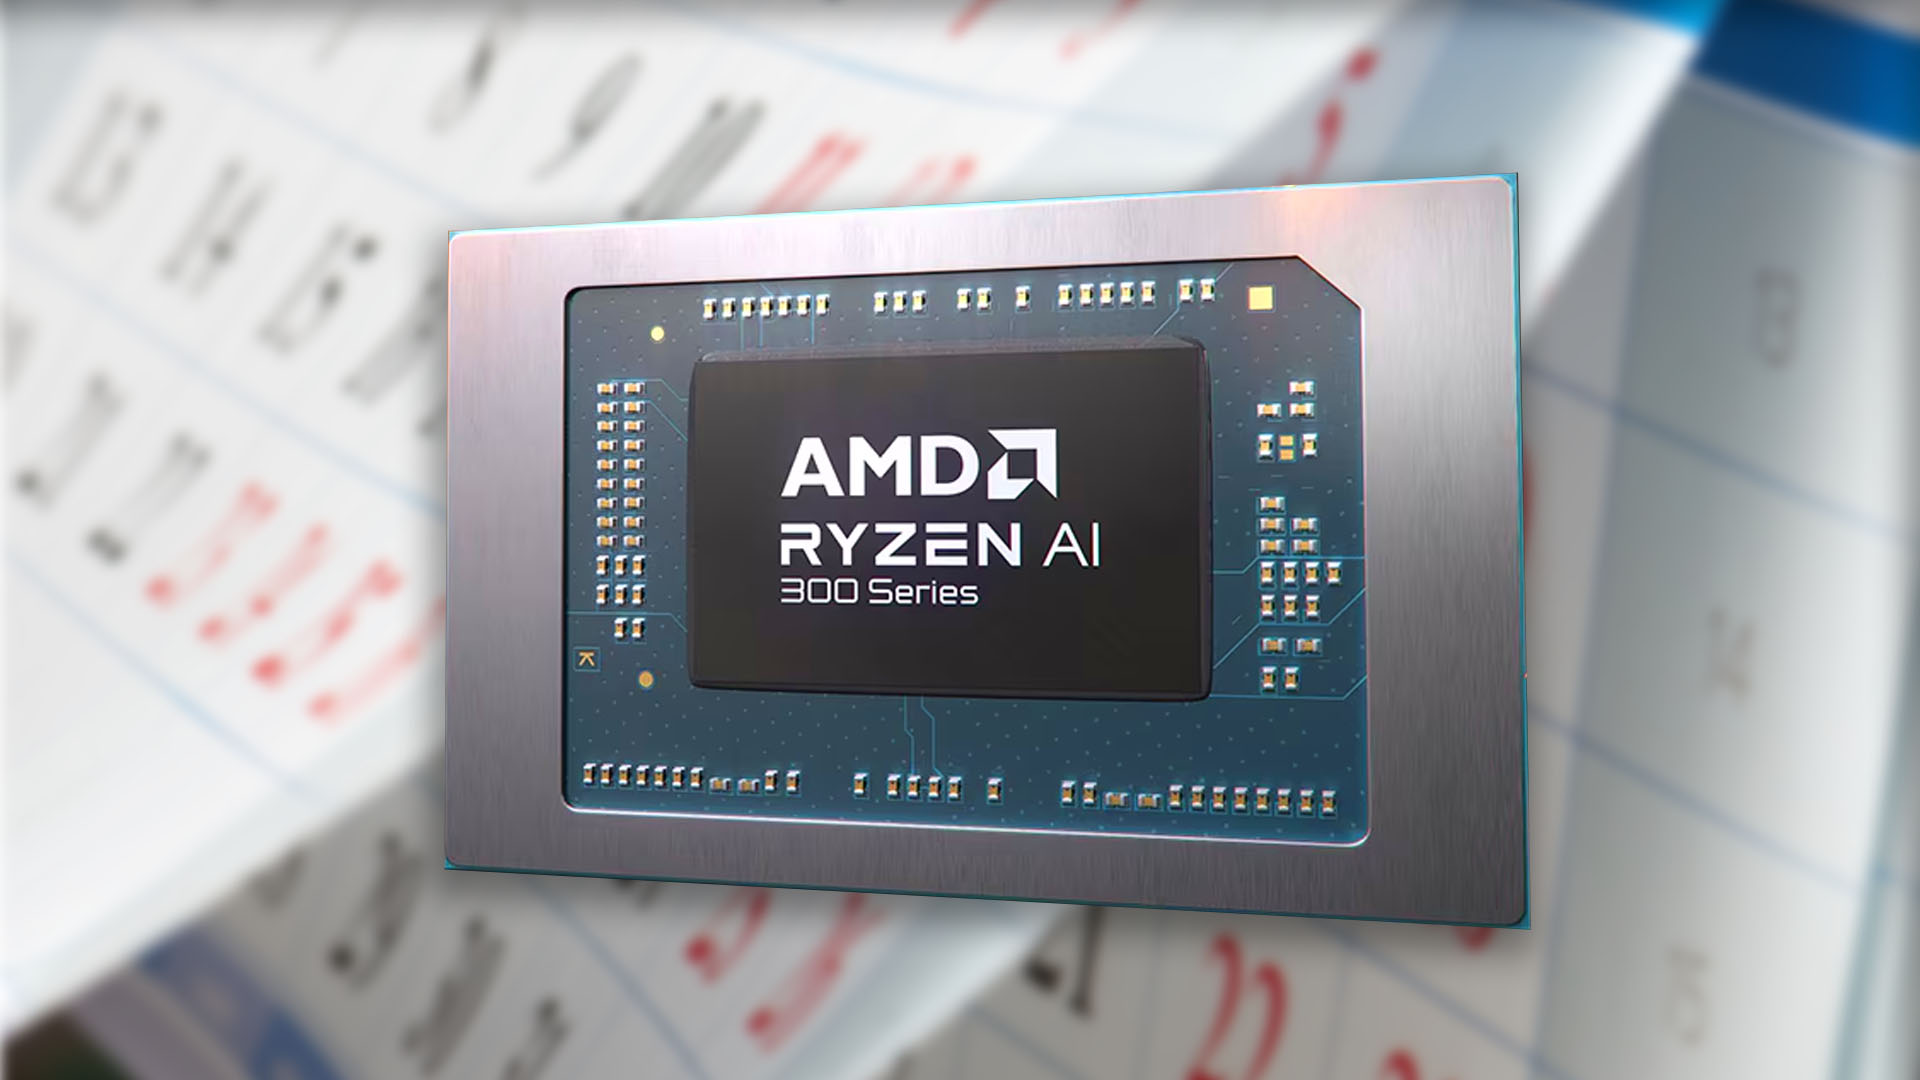 AMD's Ryzen AI 300 CPU launch apparently just got delayed